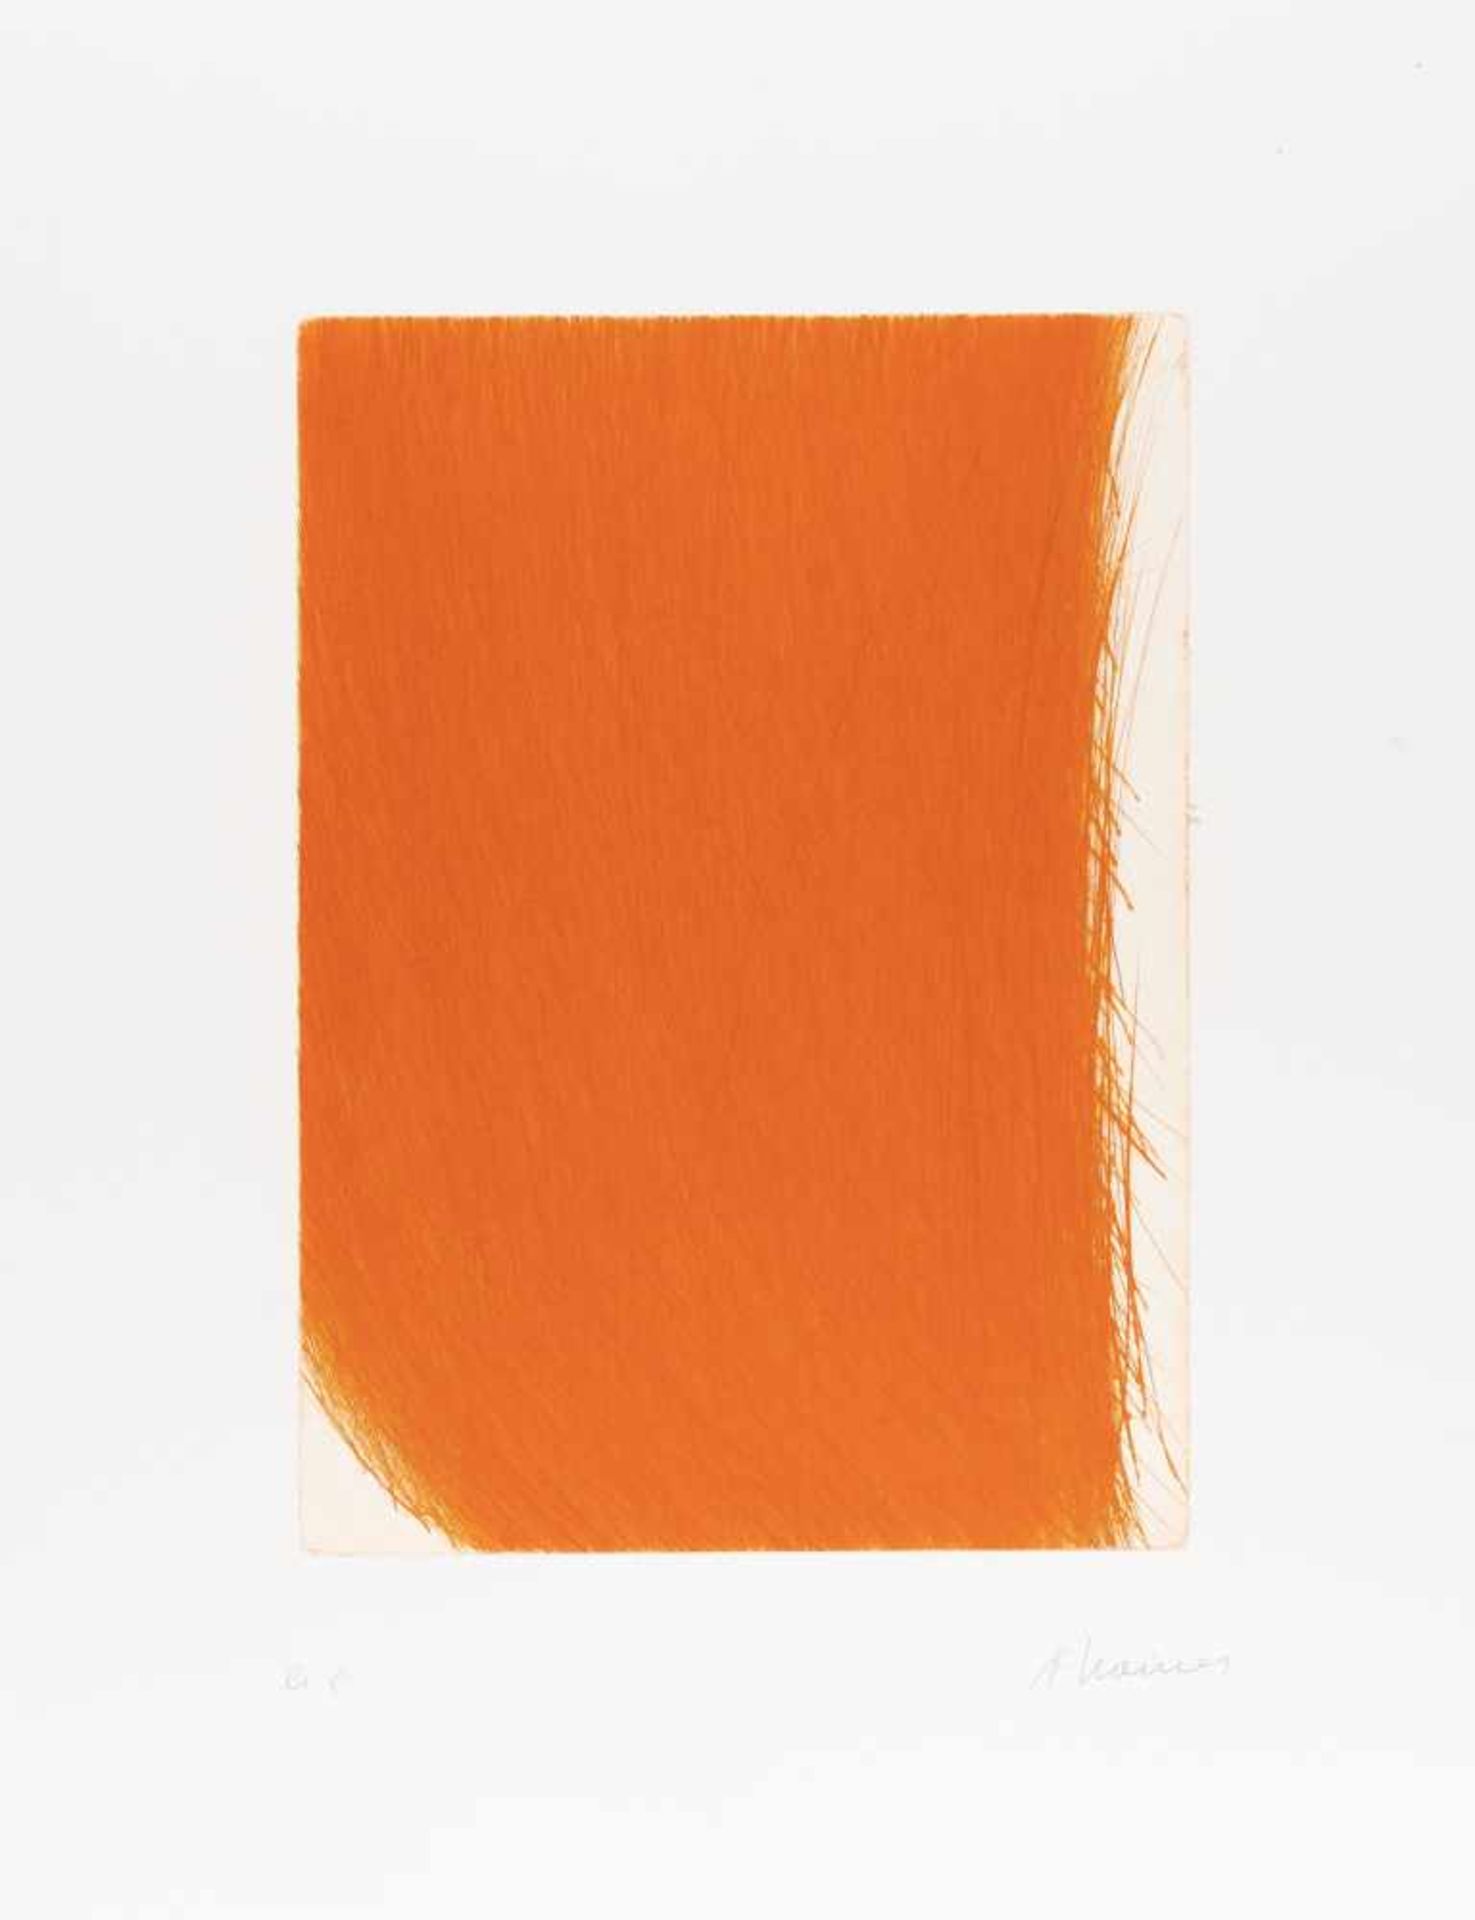 1929 Baden bei WienUntitled (Orange)Etching in colours on wove. C. 65 x 50 cm (sheet size). A